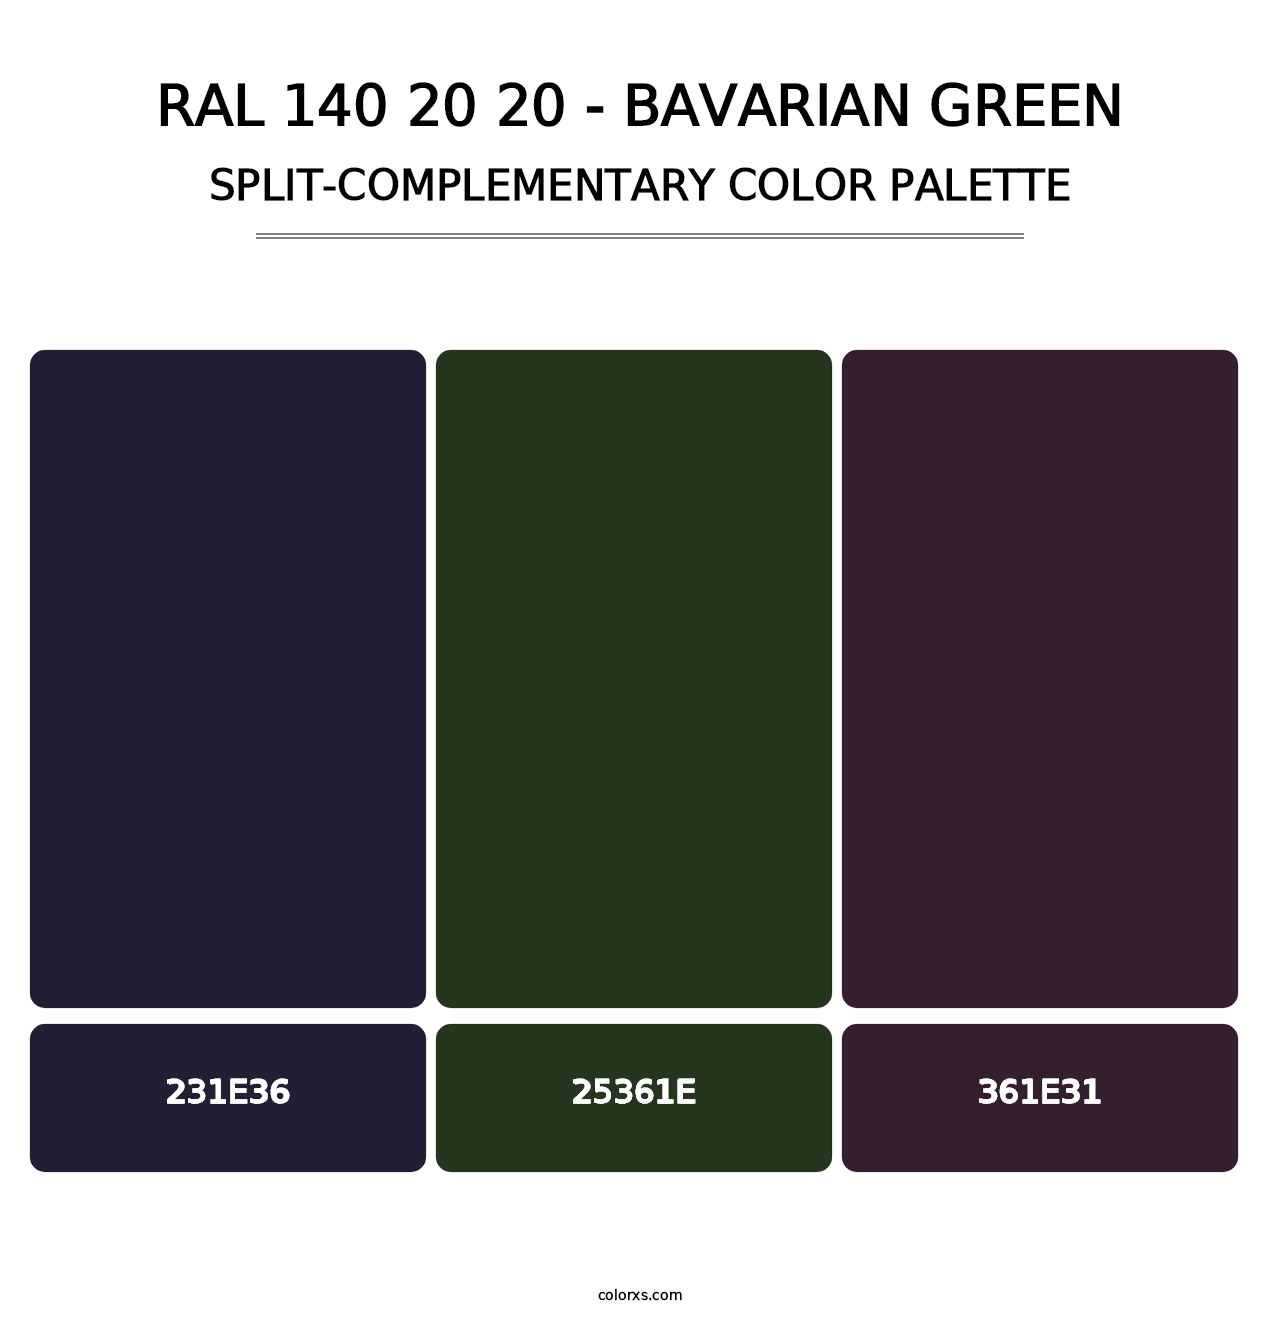 RAL 140 20 20 - Bavarian Green - Split-Complementary Color Palette